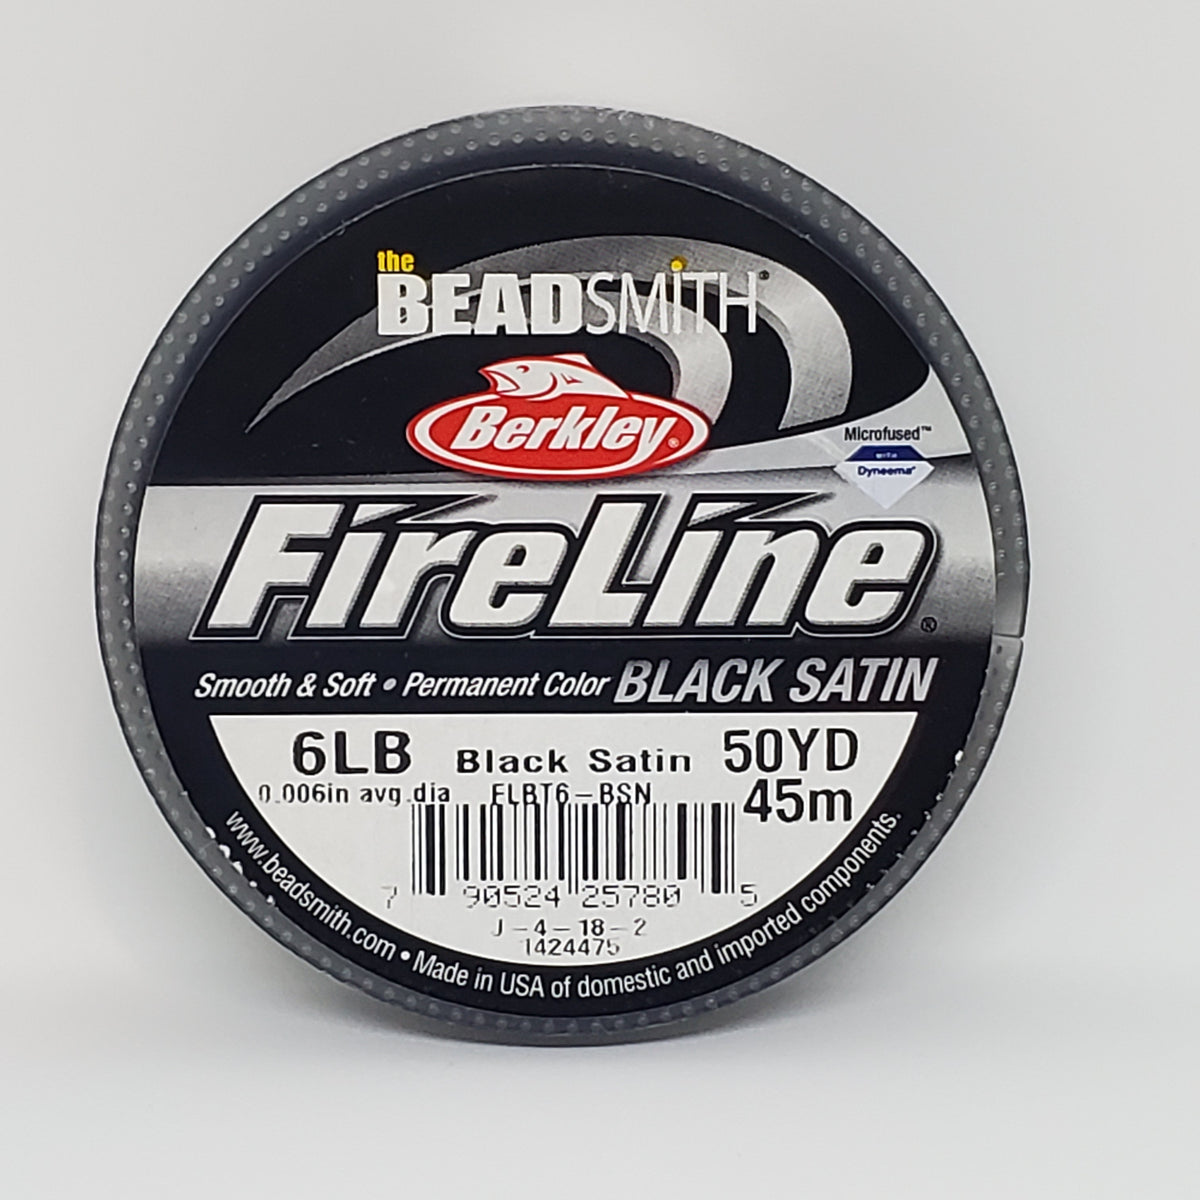 Fireline-6lb Crystal, 50 Yards 